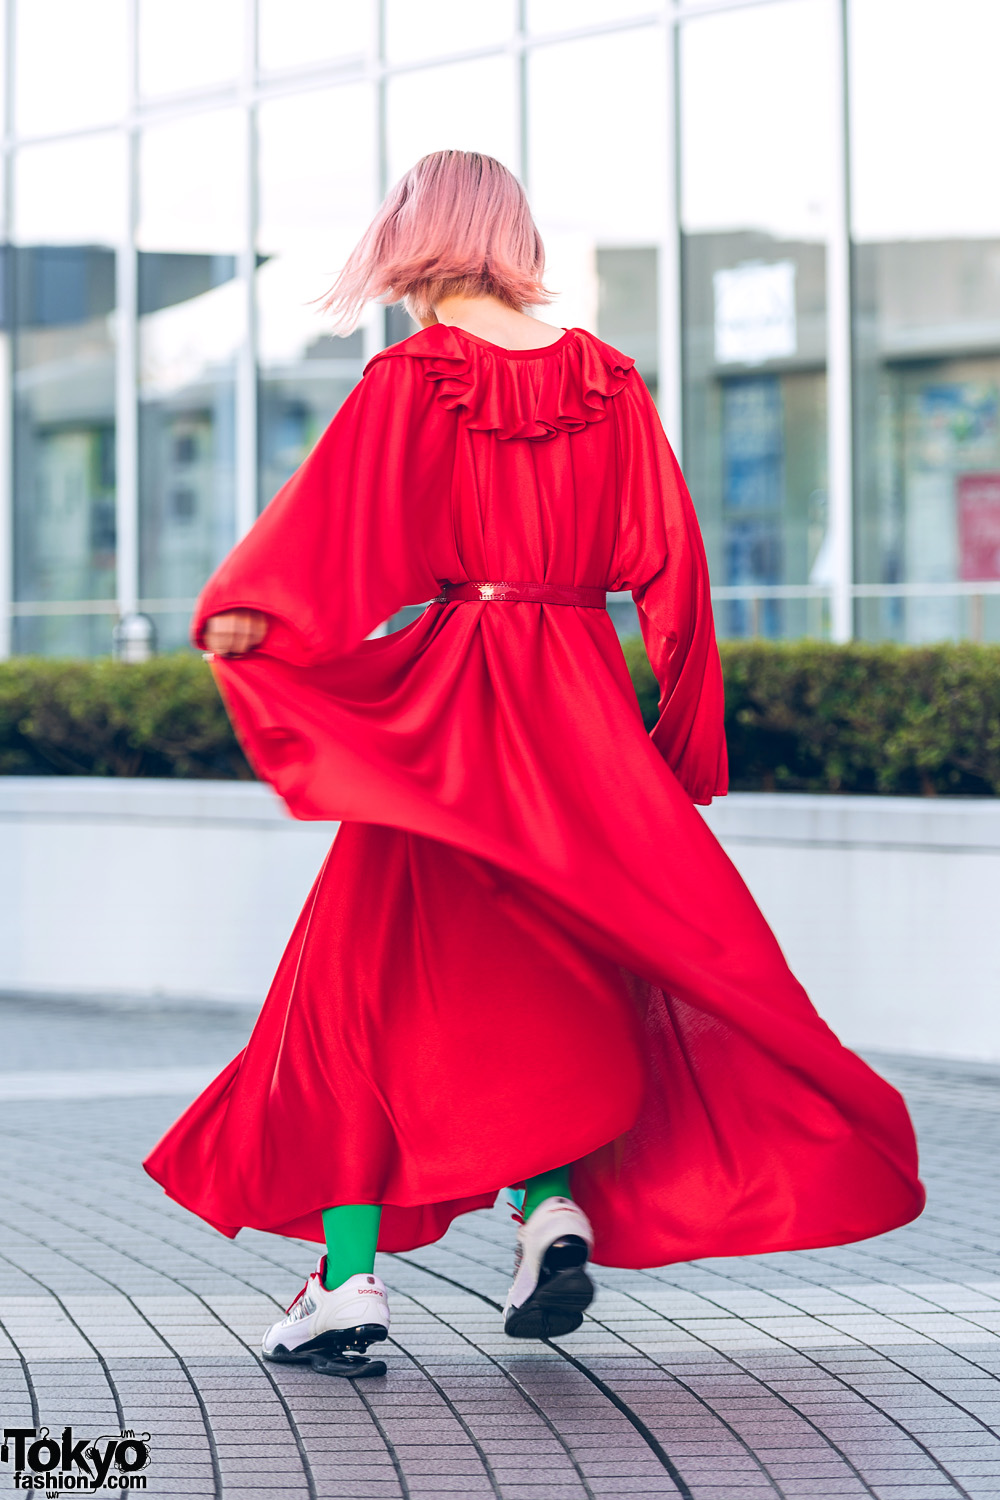 Bunka Fashion College Colorful Vintage Street Style w/ Red Dress ...